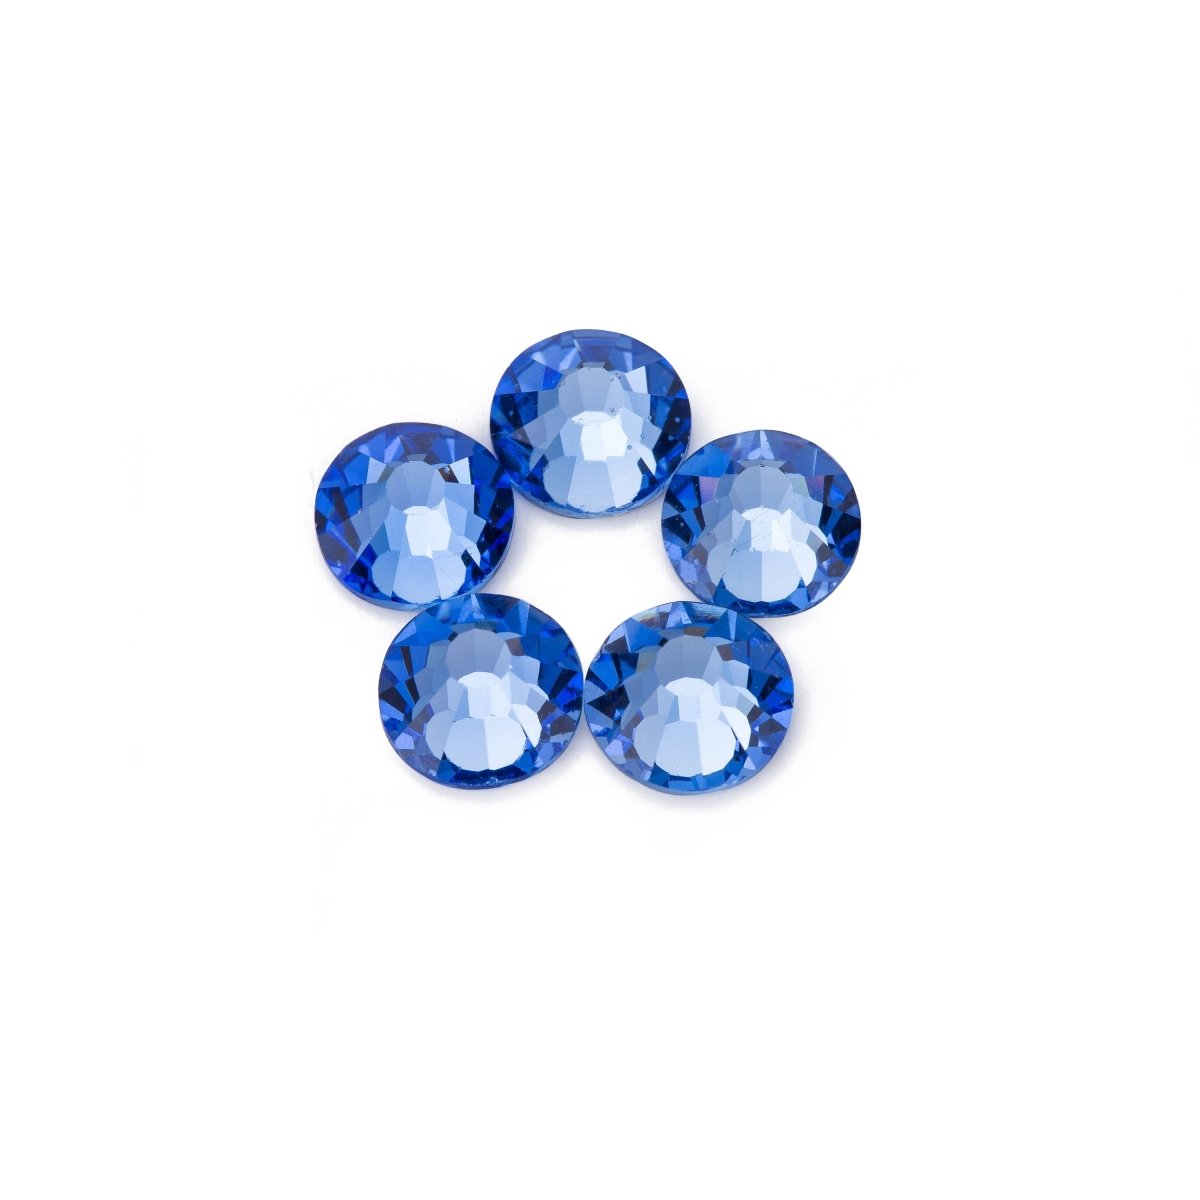 288 pcs High Quality Crystal Bright Light Blue Sapphire Rhinestones Loose wholesale Crystal flat back No Hot Fix glass bead Size ss30 / ss34, 288-SS30-LTSAPPHIRE - DLUXCA